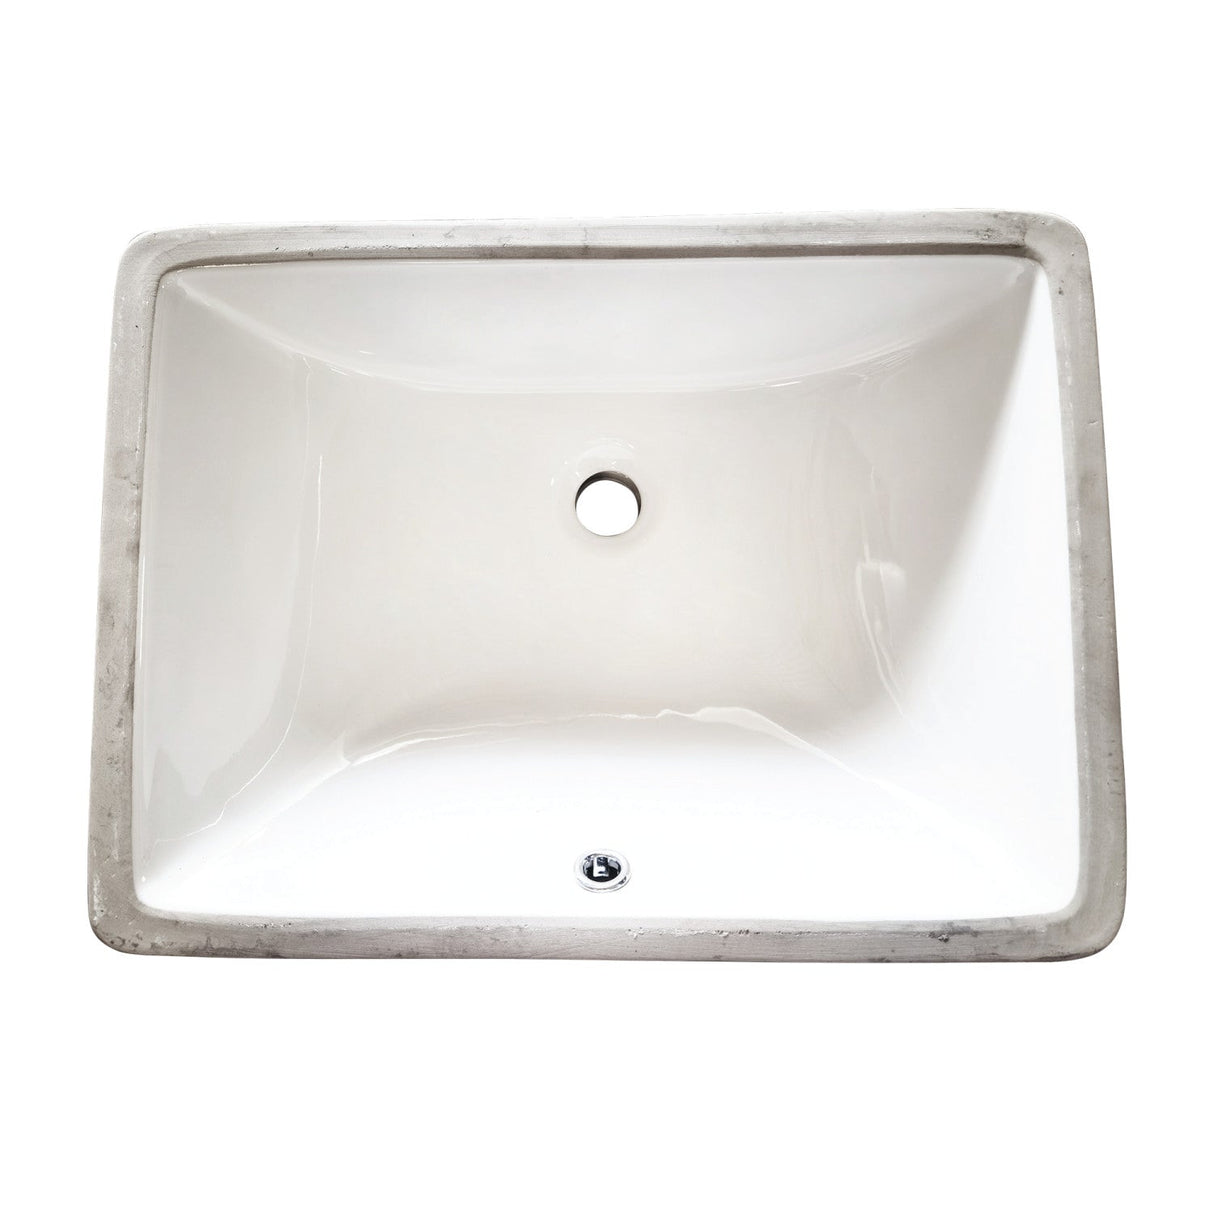 Grotto LB20157 20-Inch Ceramic Undermount Bathroom Sink, White